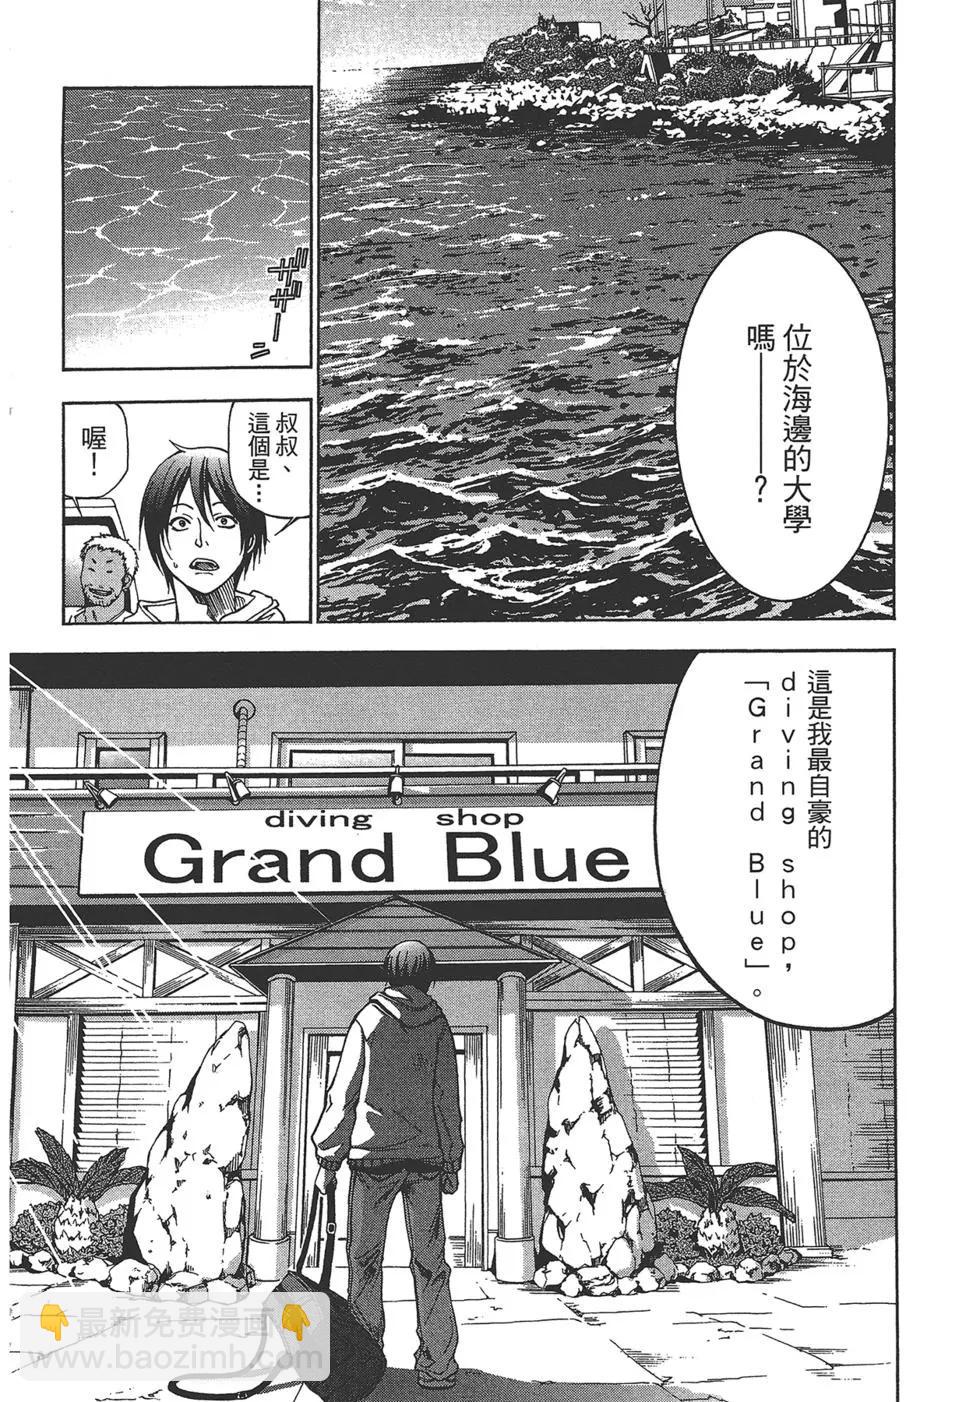 GRANDBLUE碧藍之海 - 第01卷(1/4) - 7